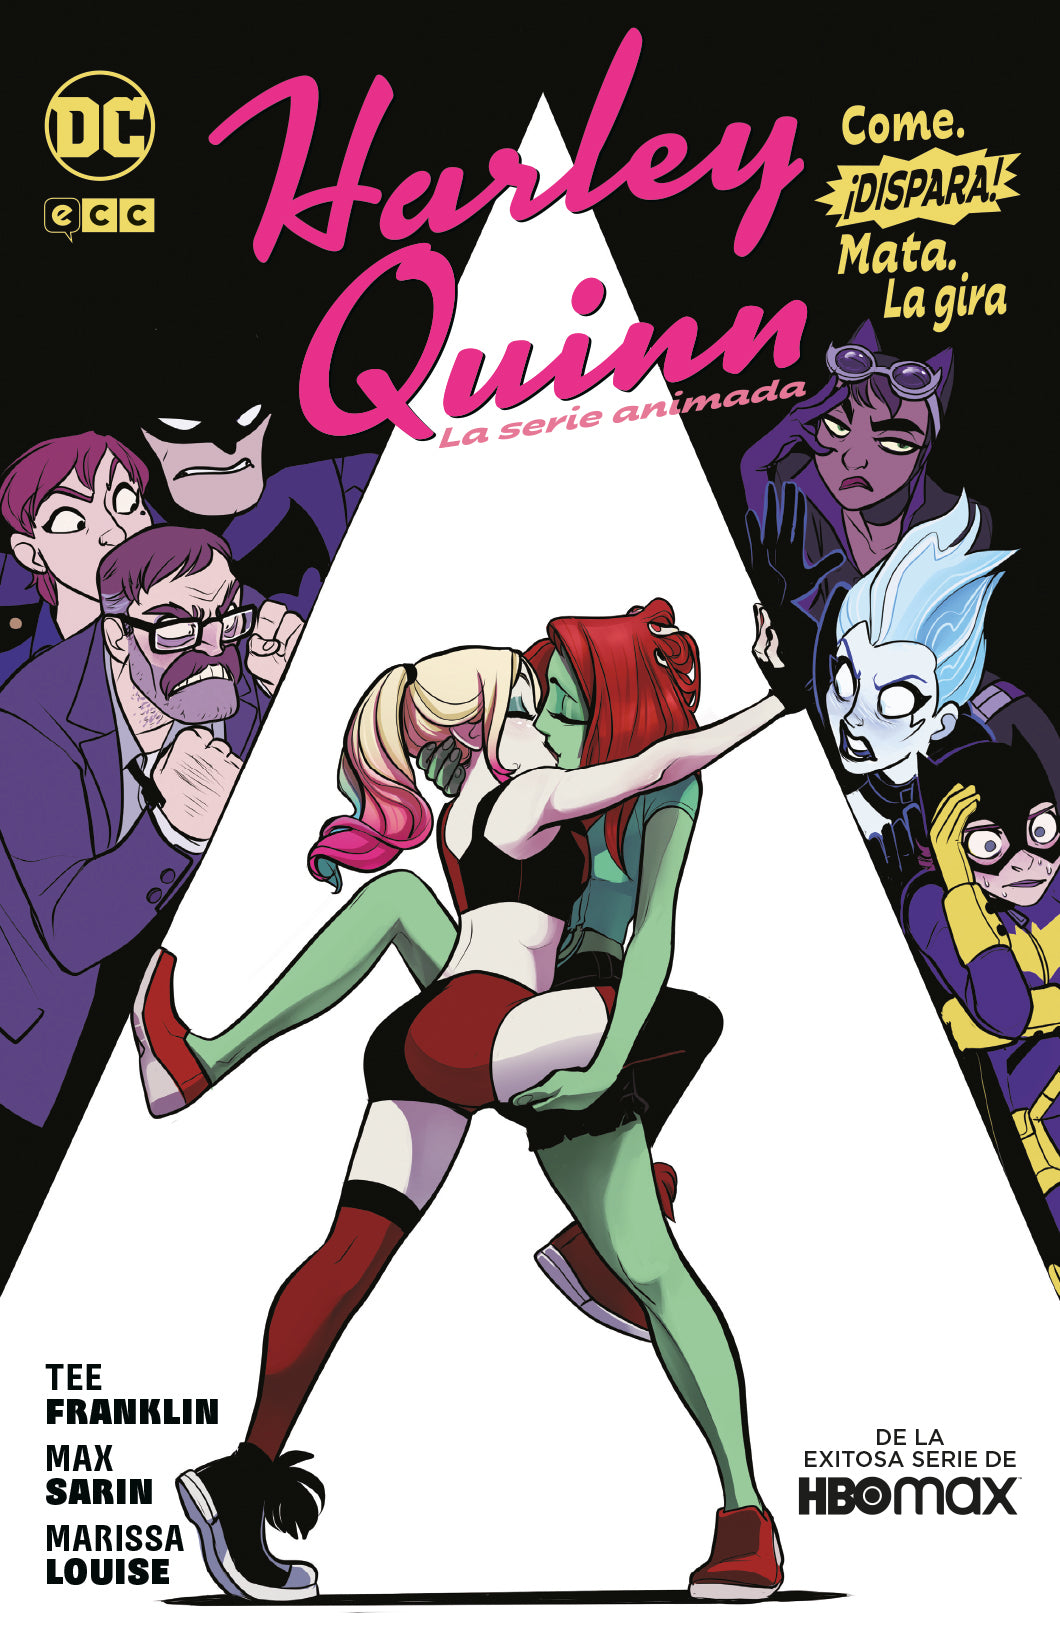 Harley Quinn - La serie animada - Come, dispara, mata: la gira Ecc ENcuadrocomics